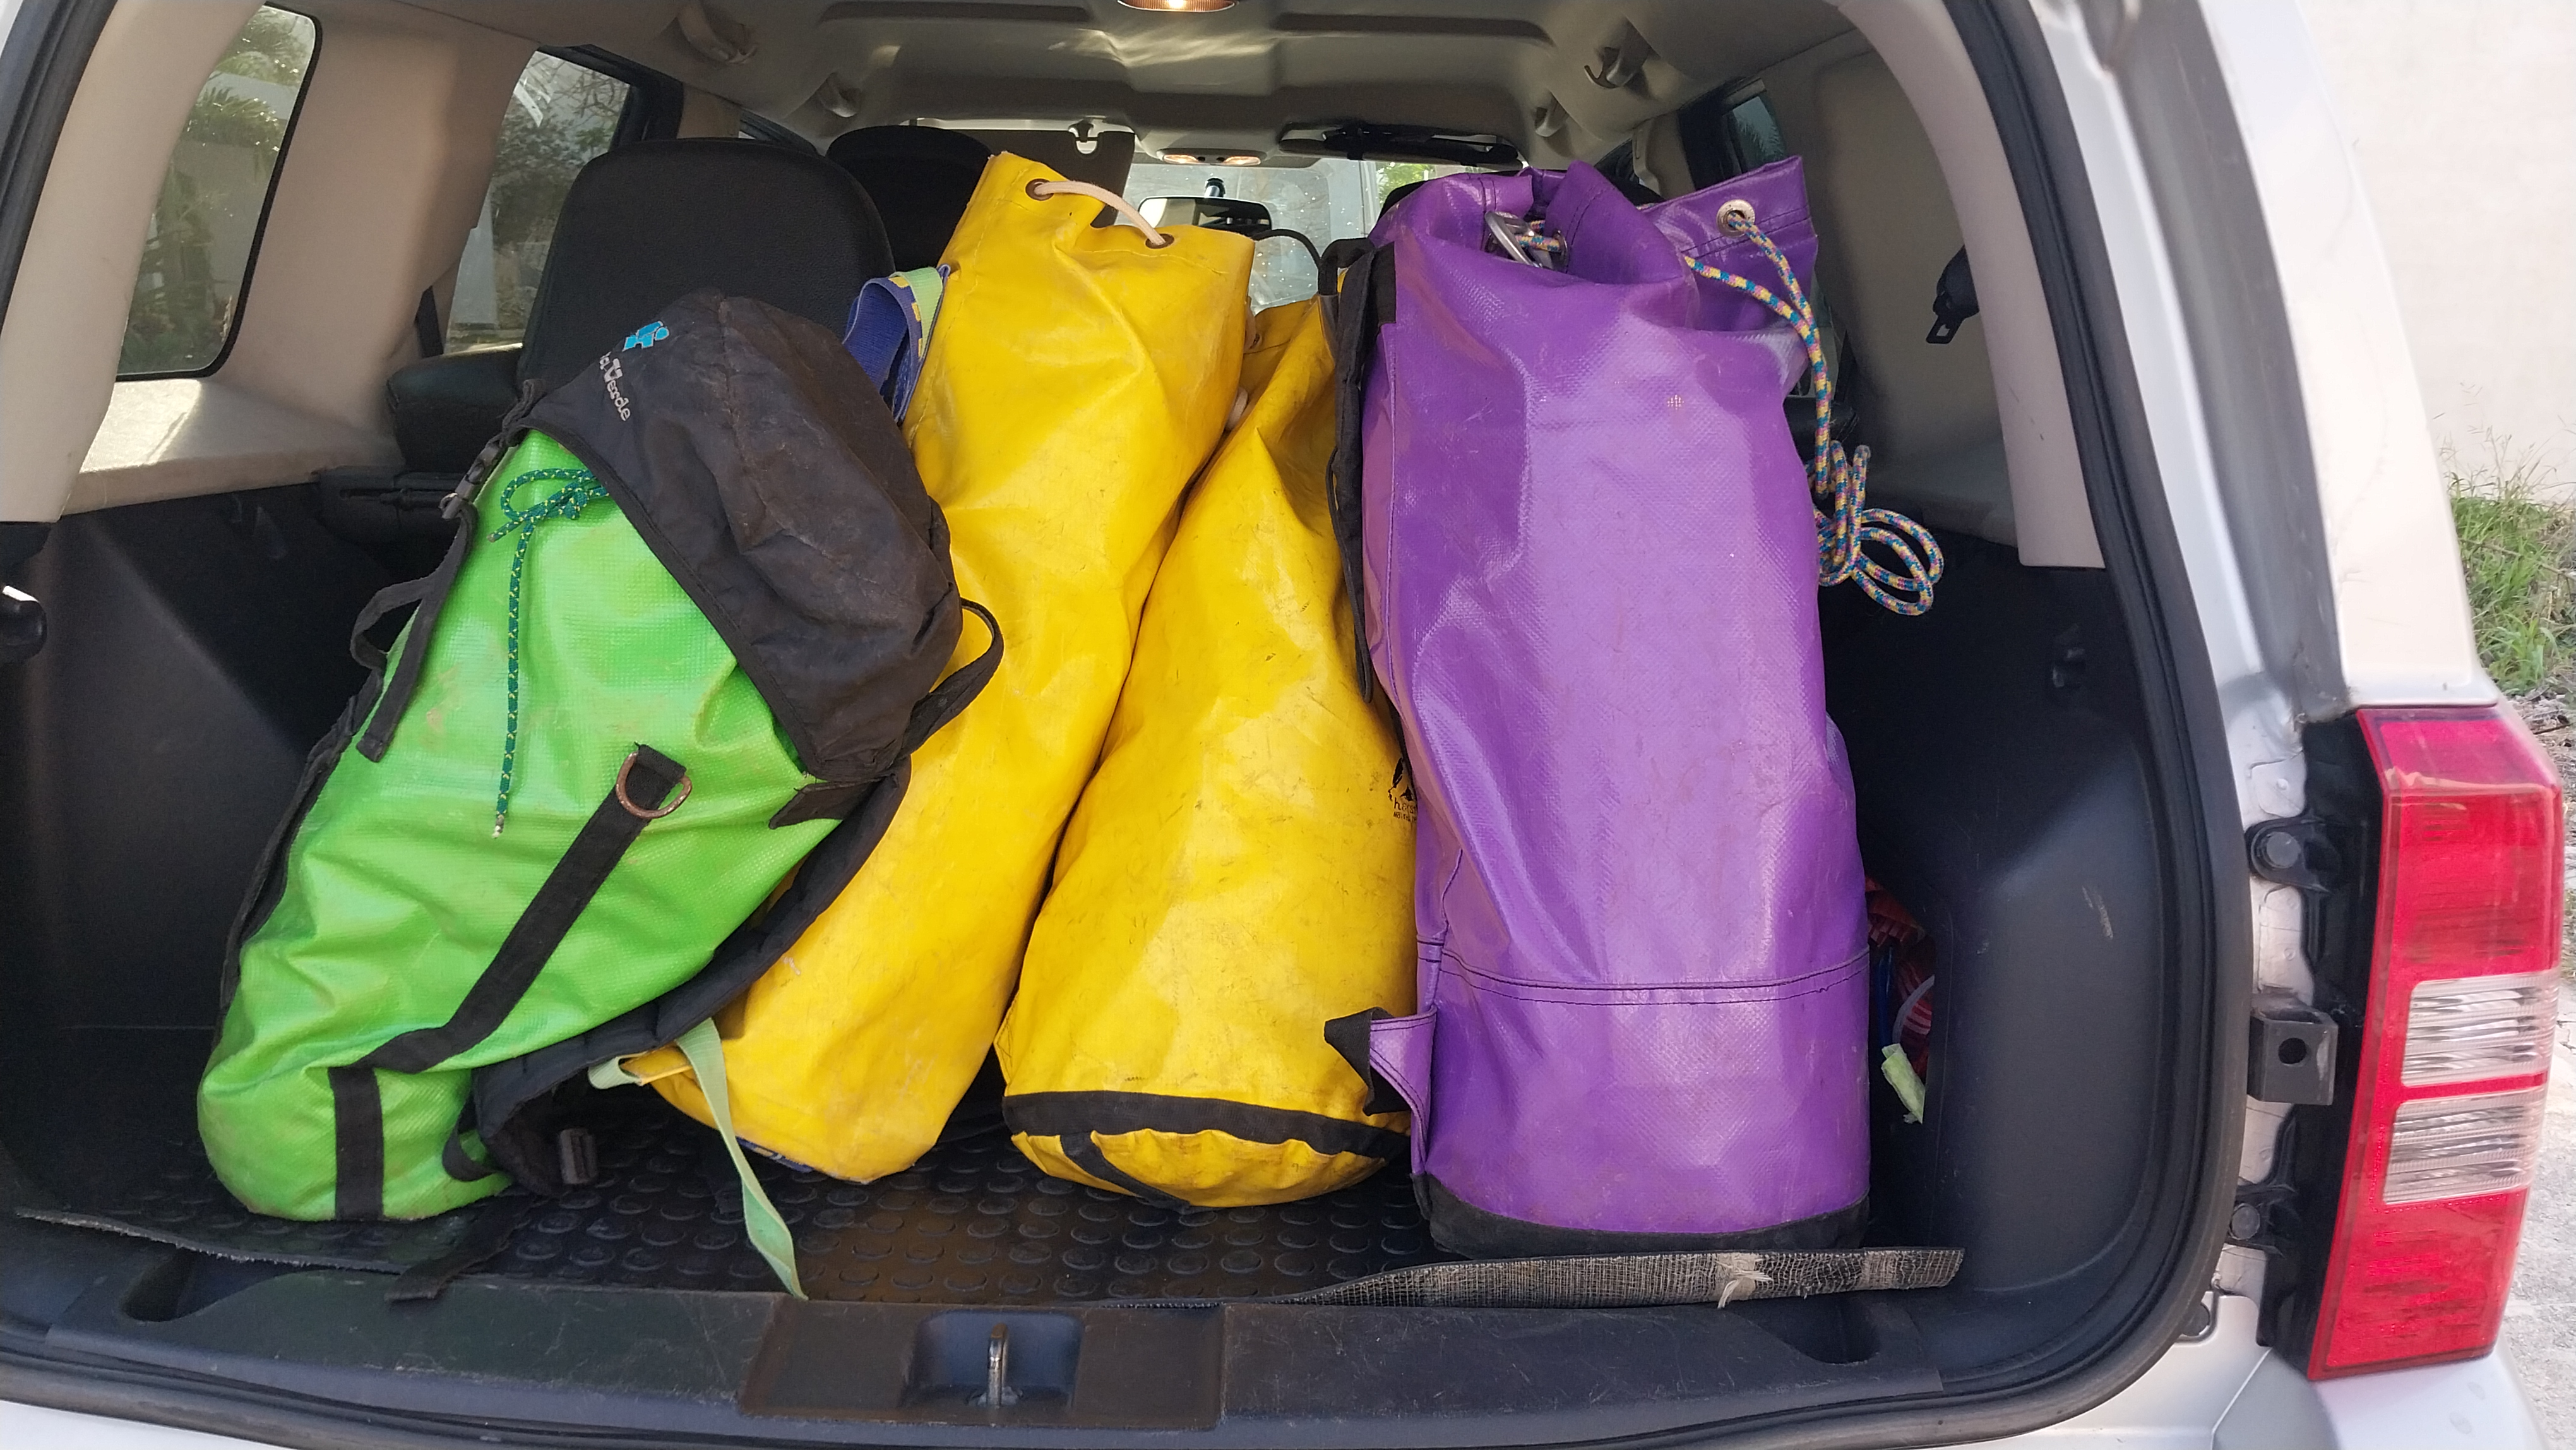 Colorful duffel bags in trunk of car